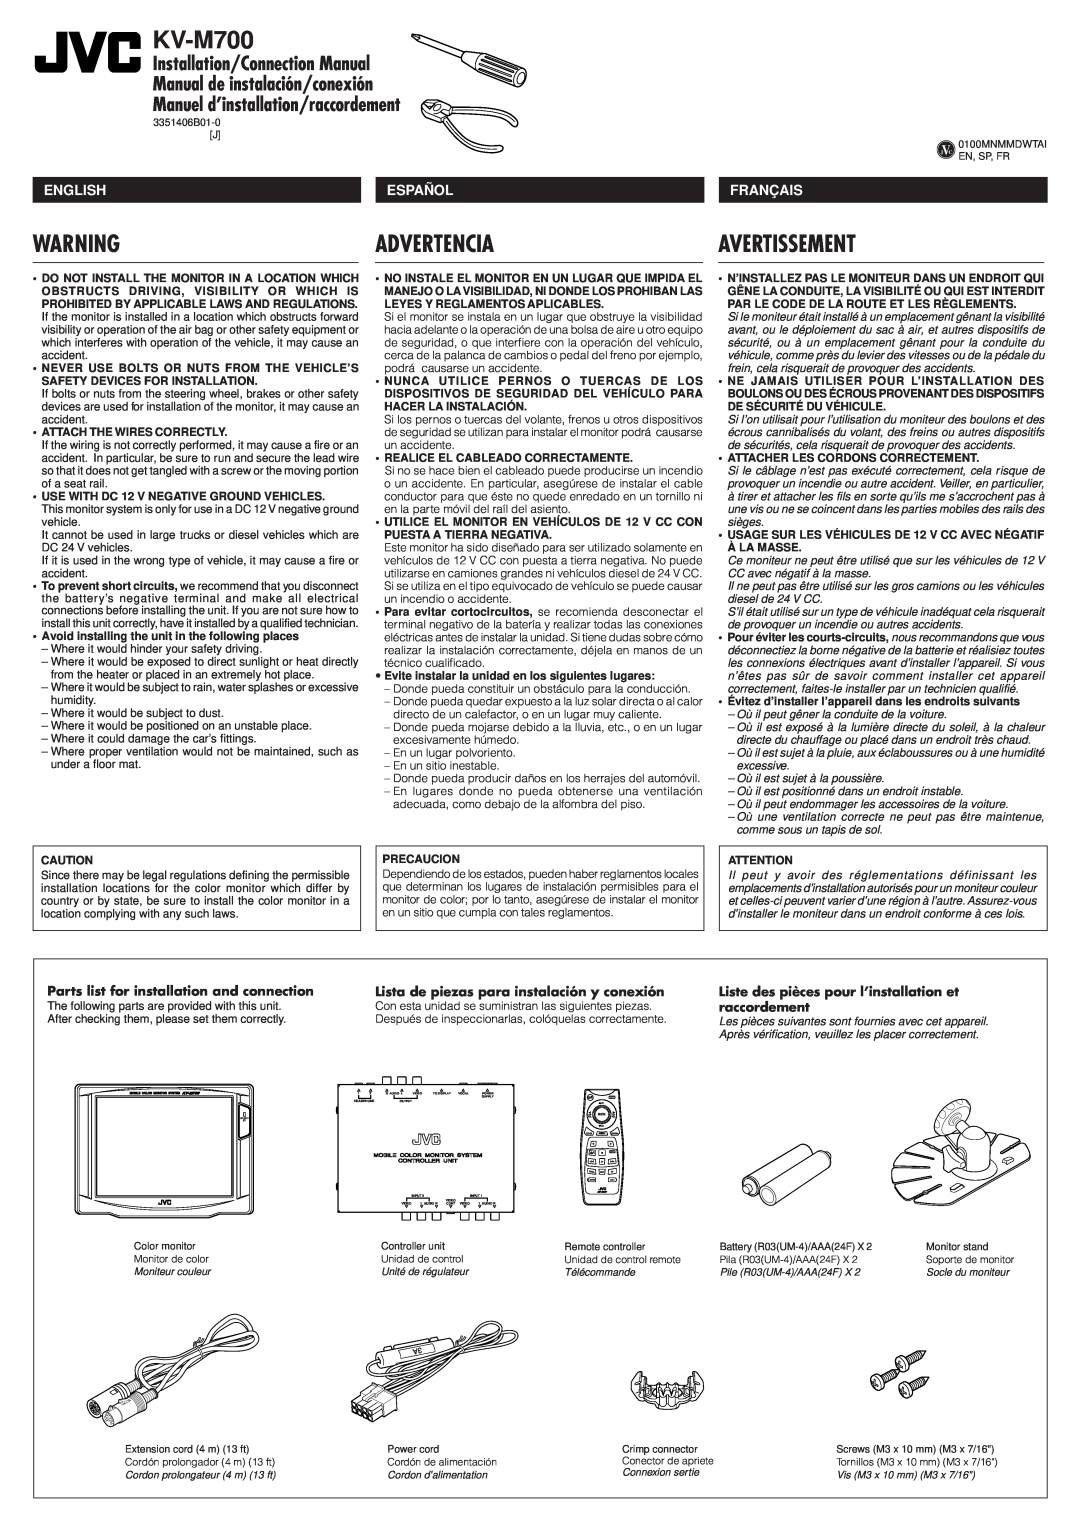 JVC KV-M700 manual Advertencia, Avertissement, Installation/Connection Manual Manual de instalación/conexión, English 